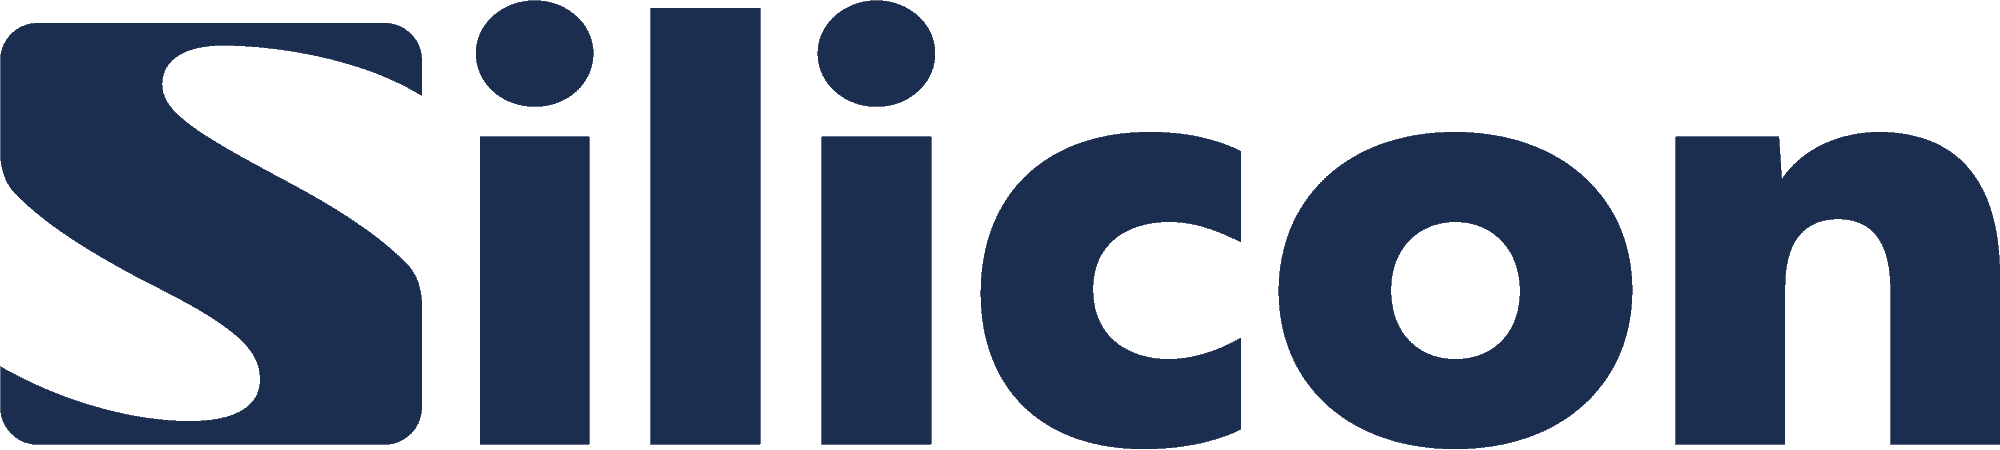 Logo for Silicon magazine